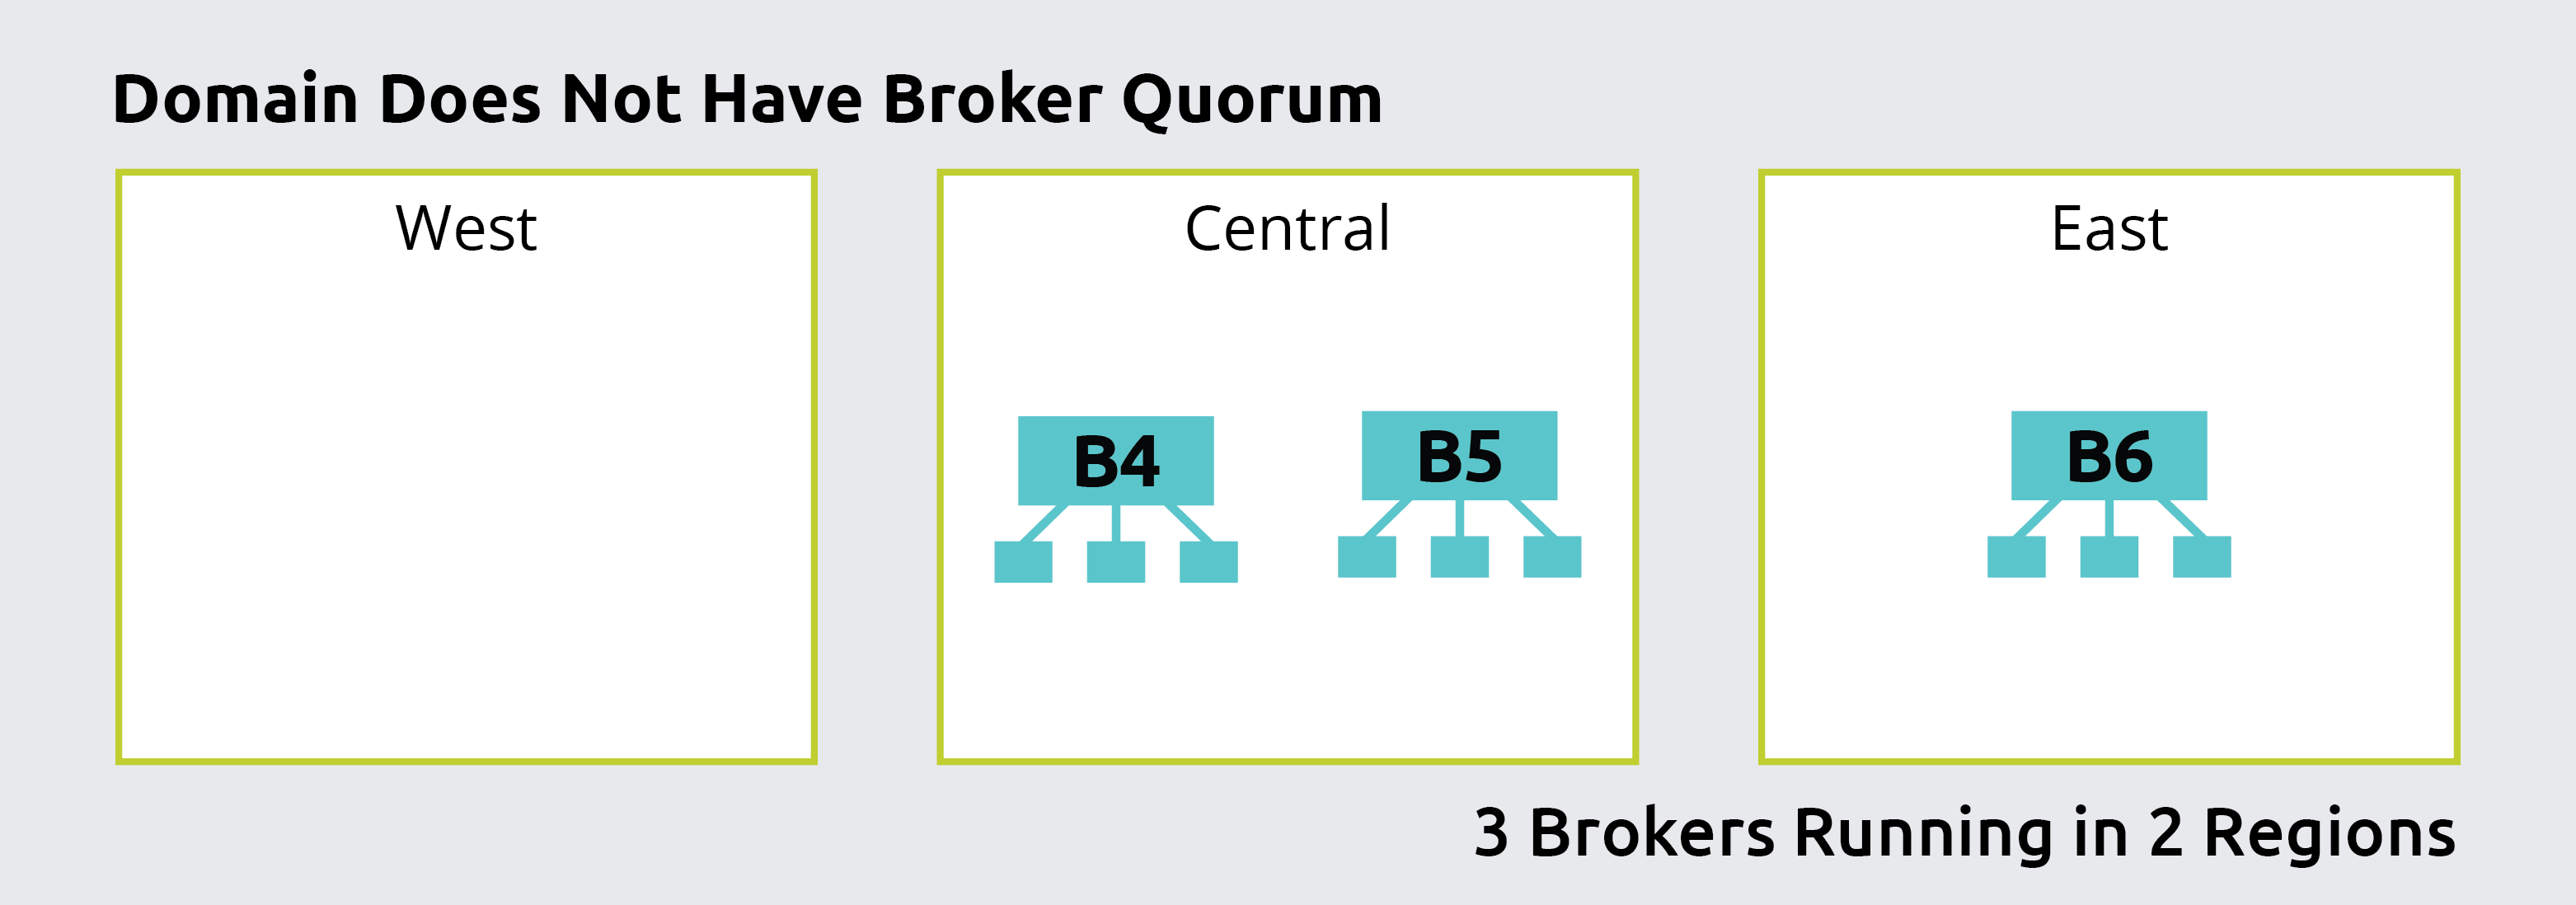 Broker Quorum Graphic 04